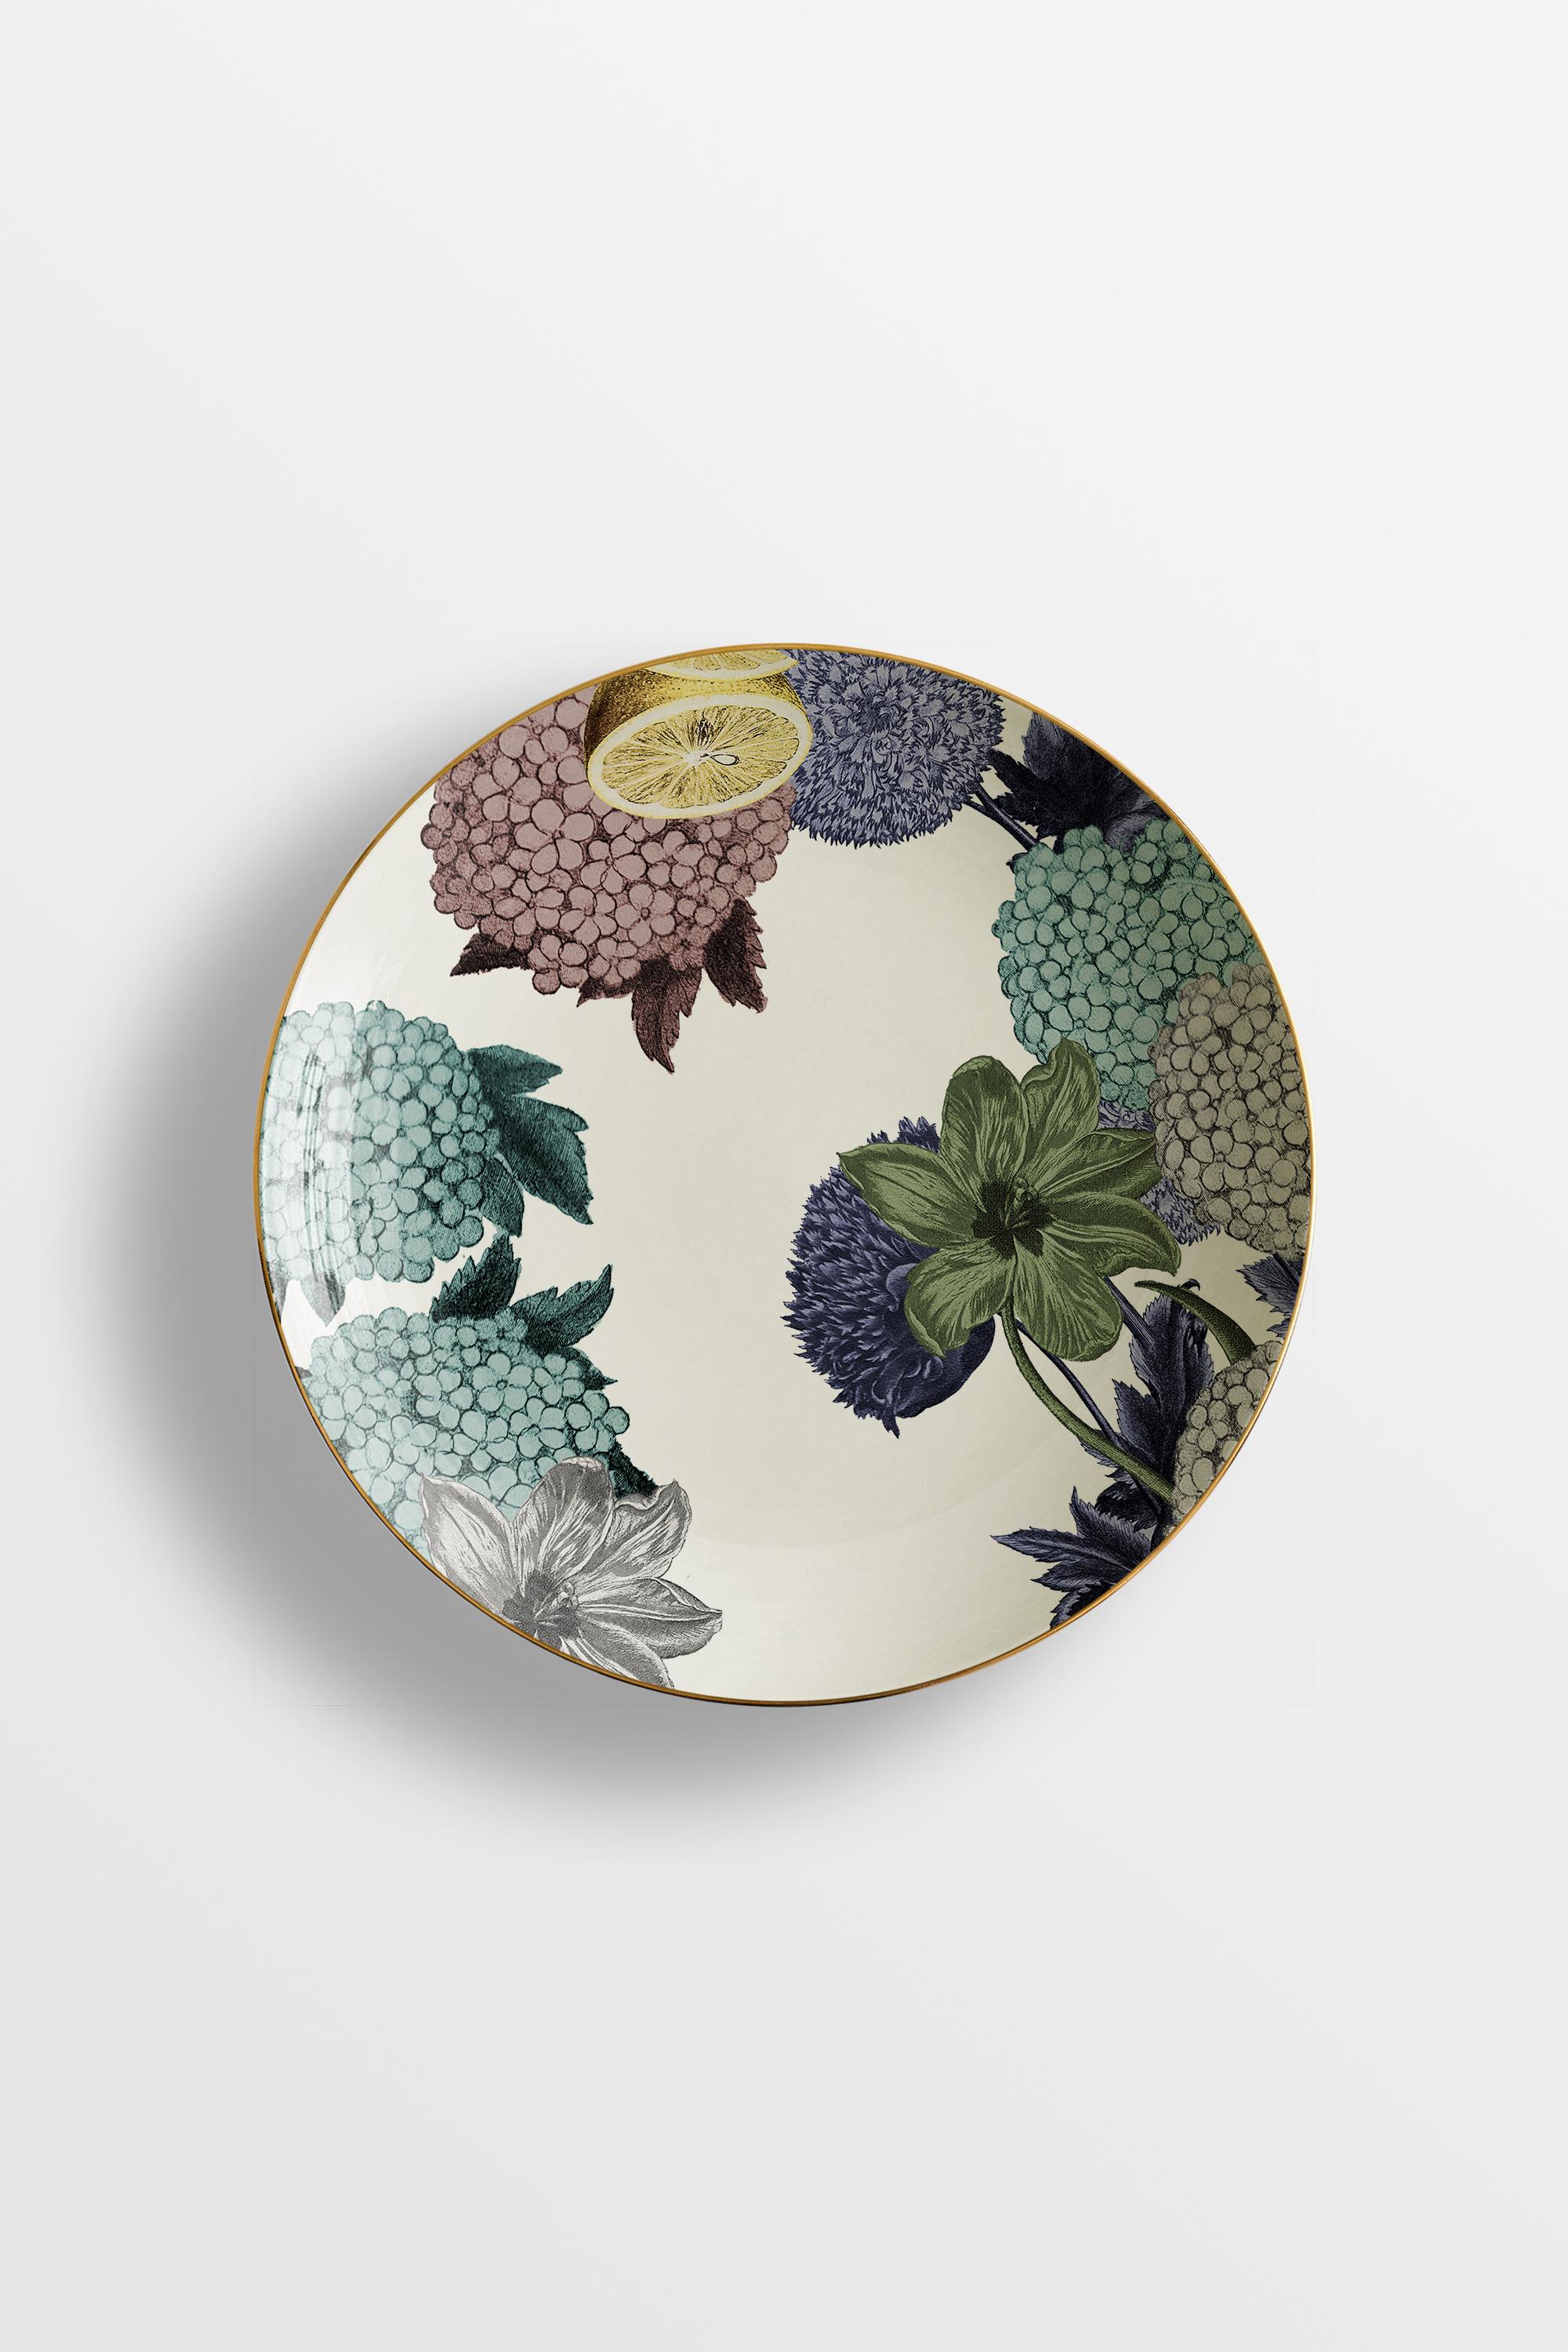 Cairo, Six Contemporary Porcelain Soup Plates with Decorative Design For Sale 2